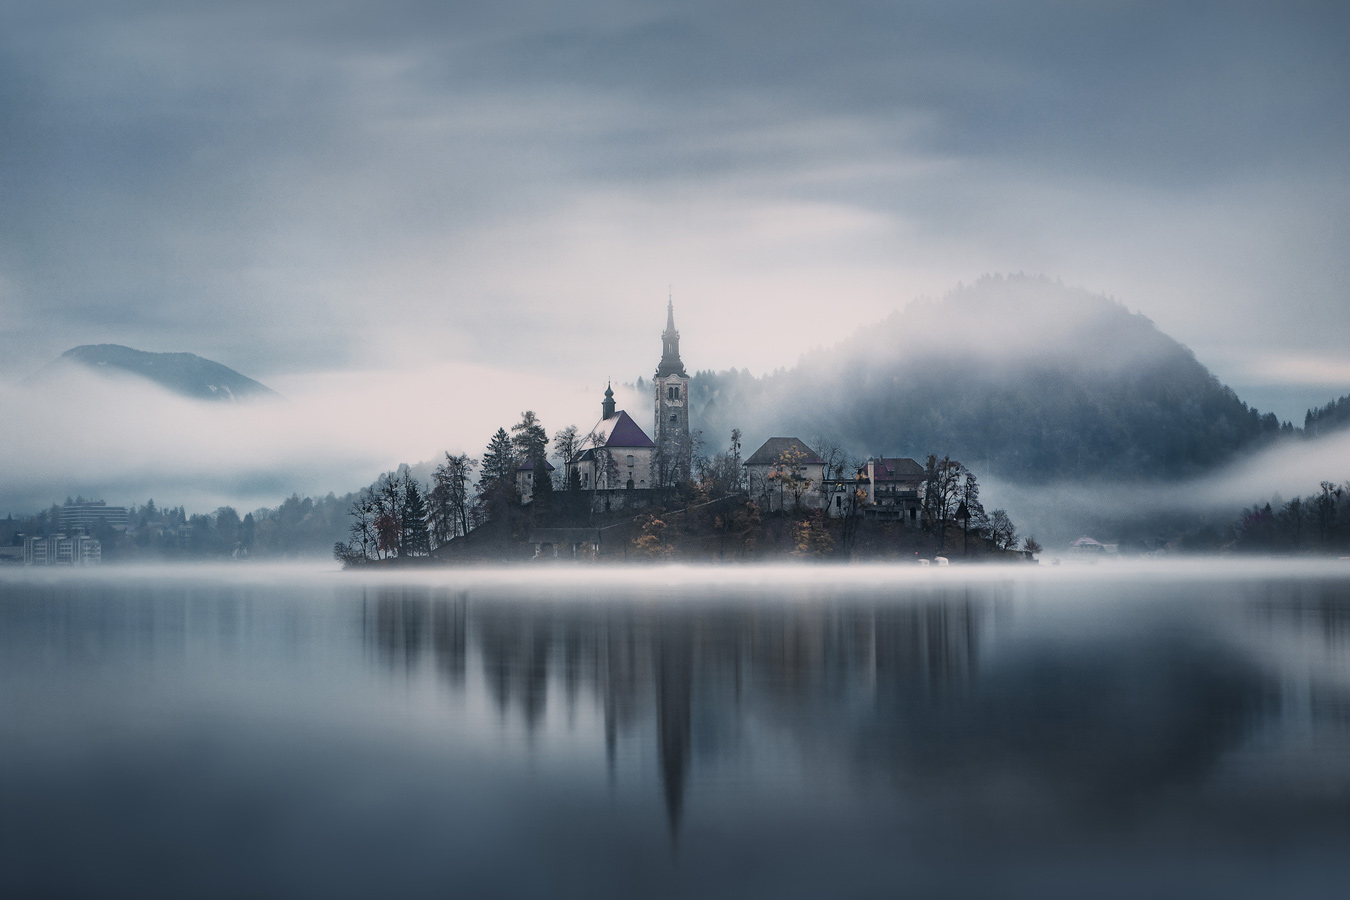 Gloomy morning, © Dmitry Kupratsevich, Russia, Landscape — daytime Nomination, 1 place, 35AWARDS Photo Contest